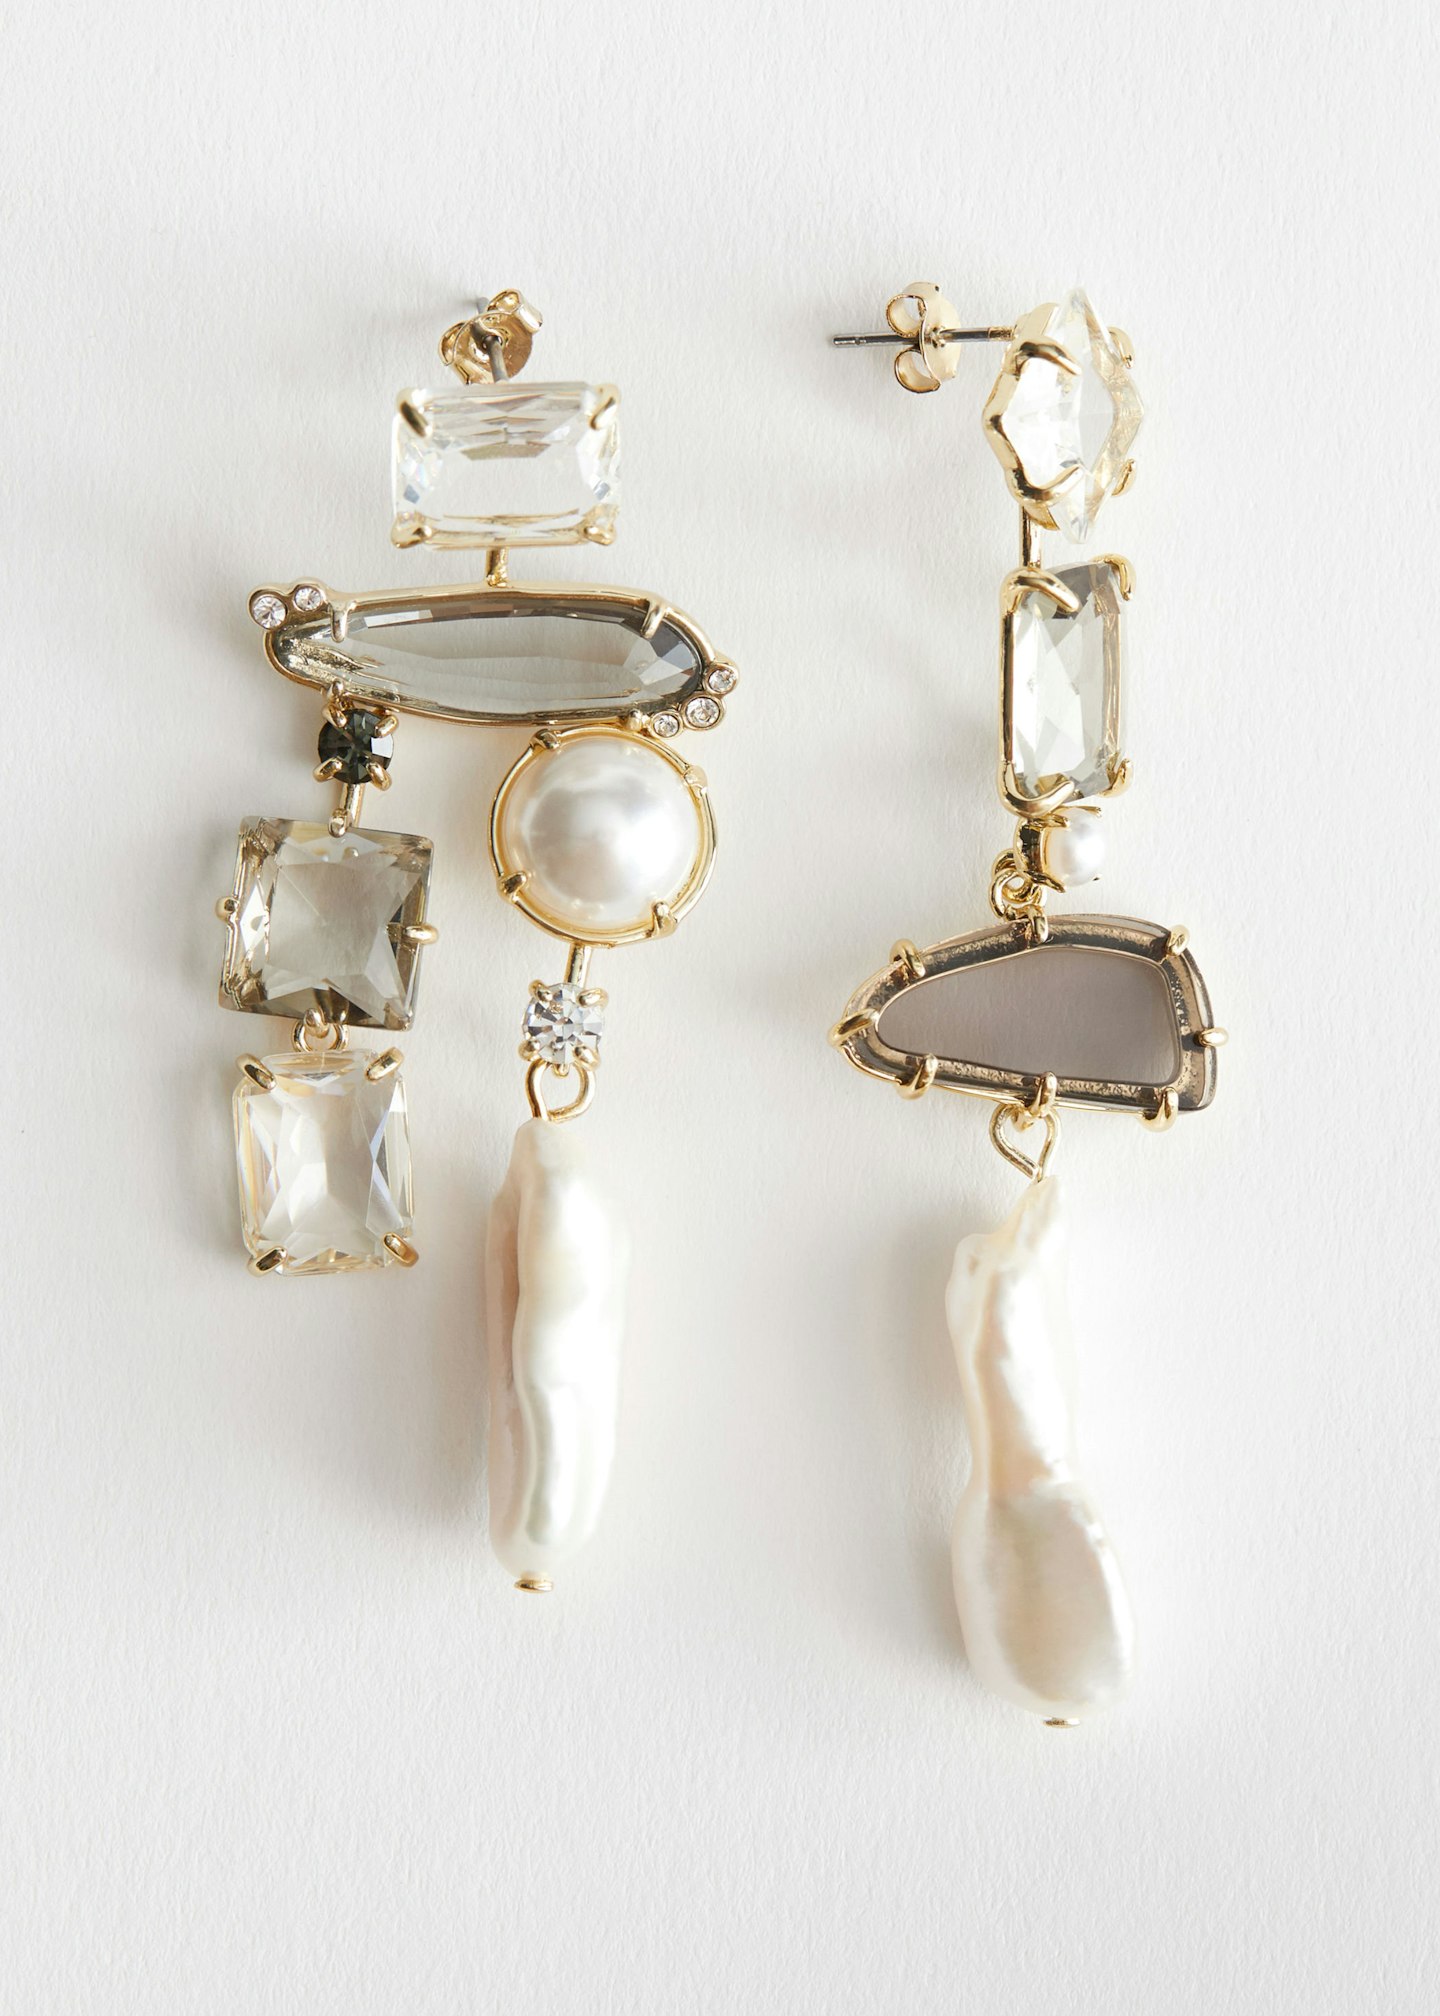 & Other Stories, Rhinestone Pearl Hanging Earrings, £35